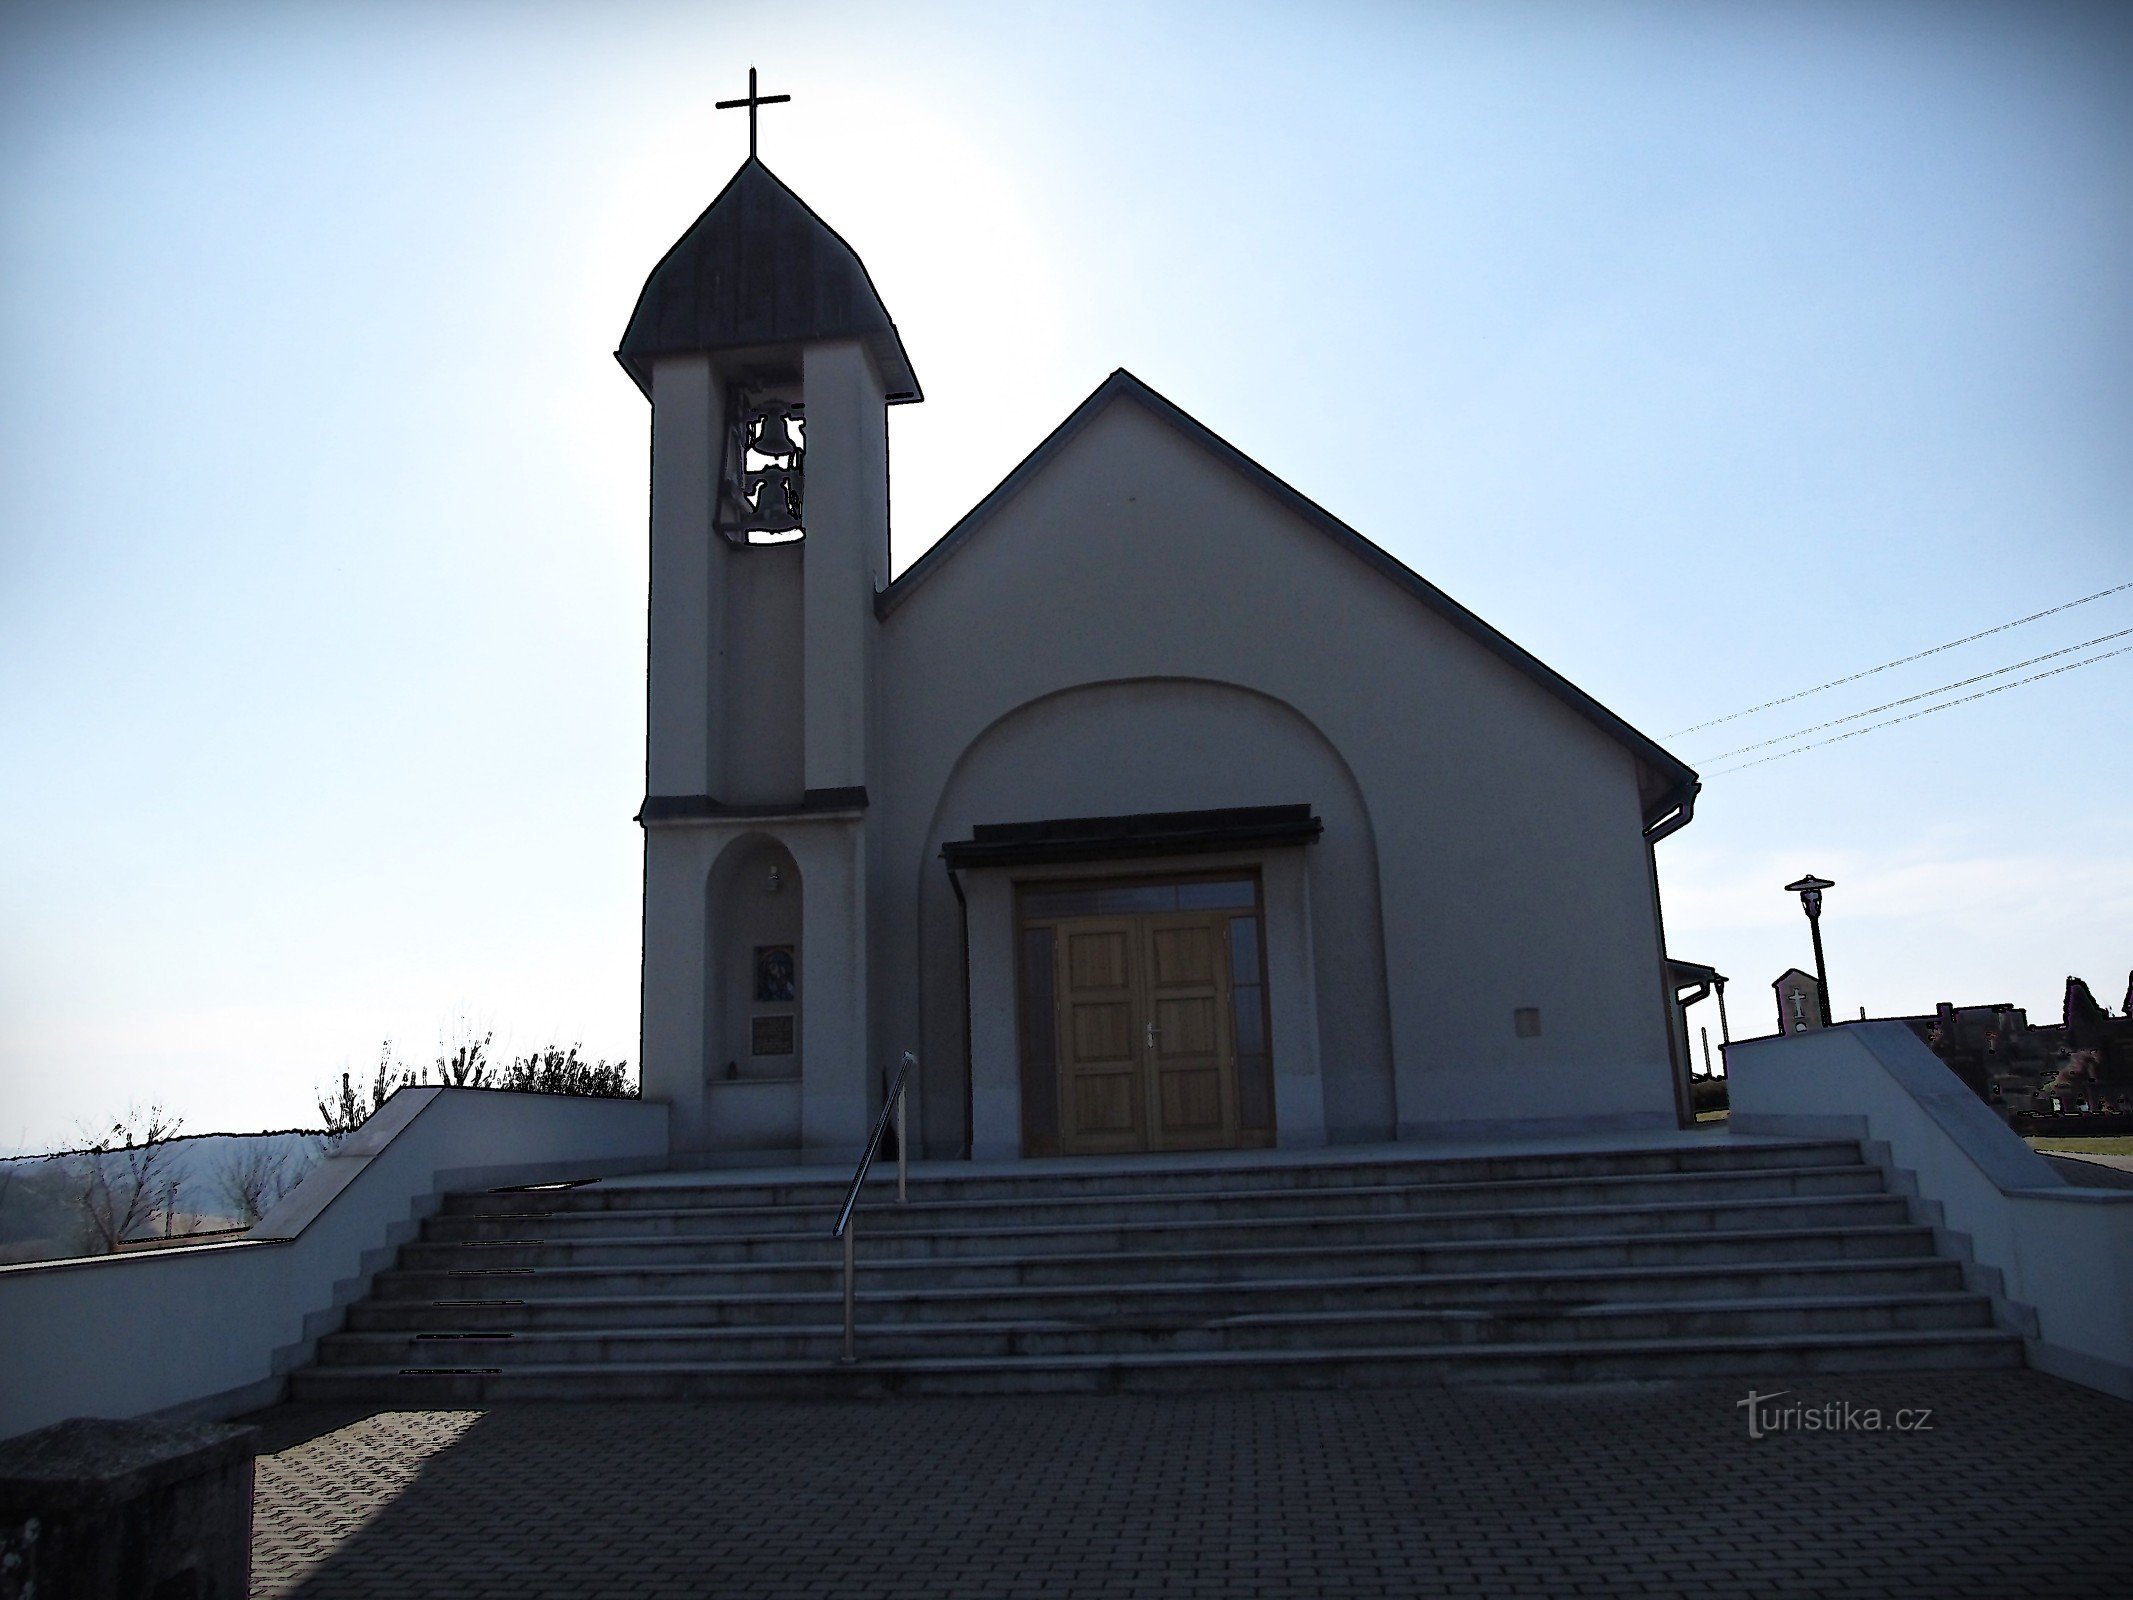 Drnovice - St. Agnes av den tjeckiska kyrkan